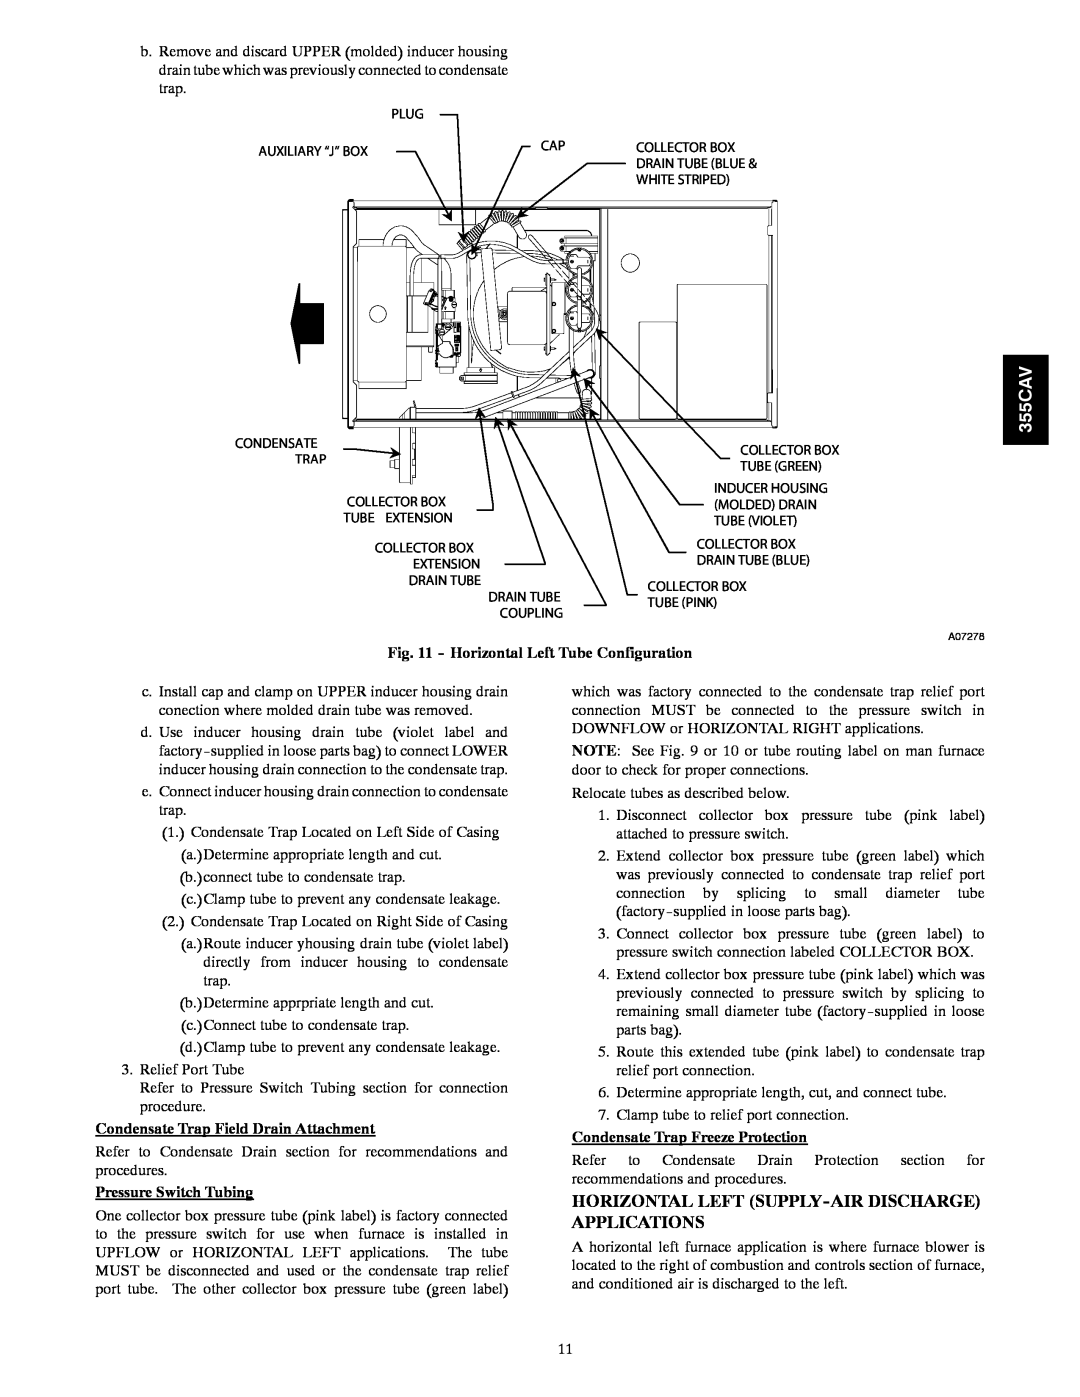 Bryant 355CAV Horizontal Left Supply-Airdischarge Applications, Horizontal Left Tube Configuration, Pressure Switch Tubing 